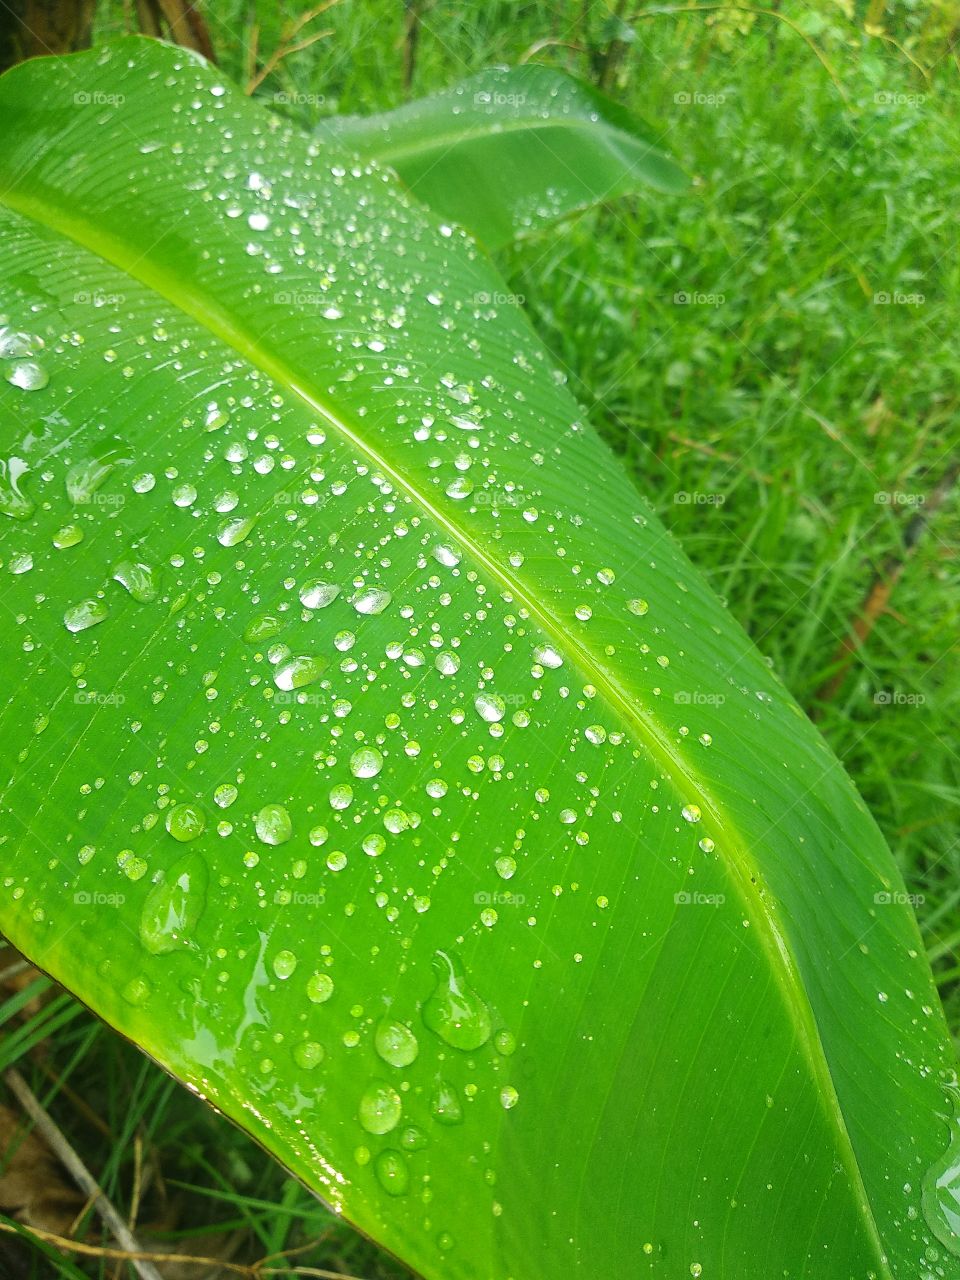 beautiful rain drop on banana leaf in nature in garden.